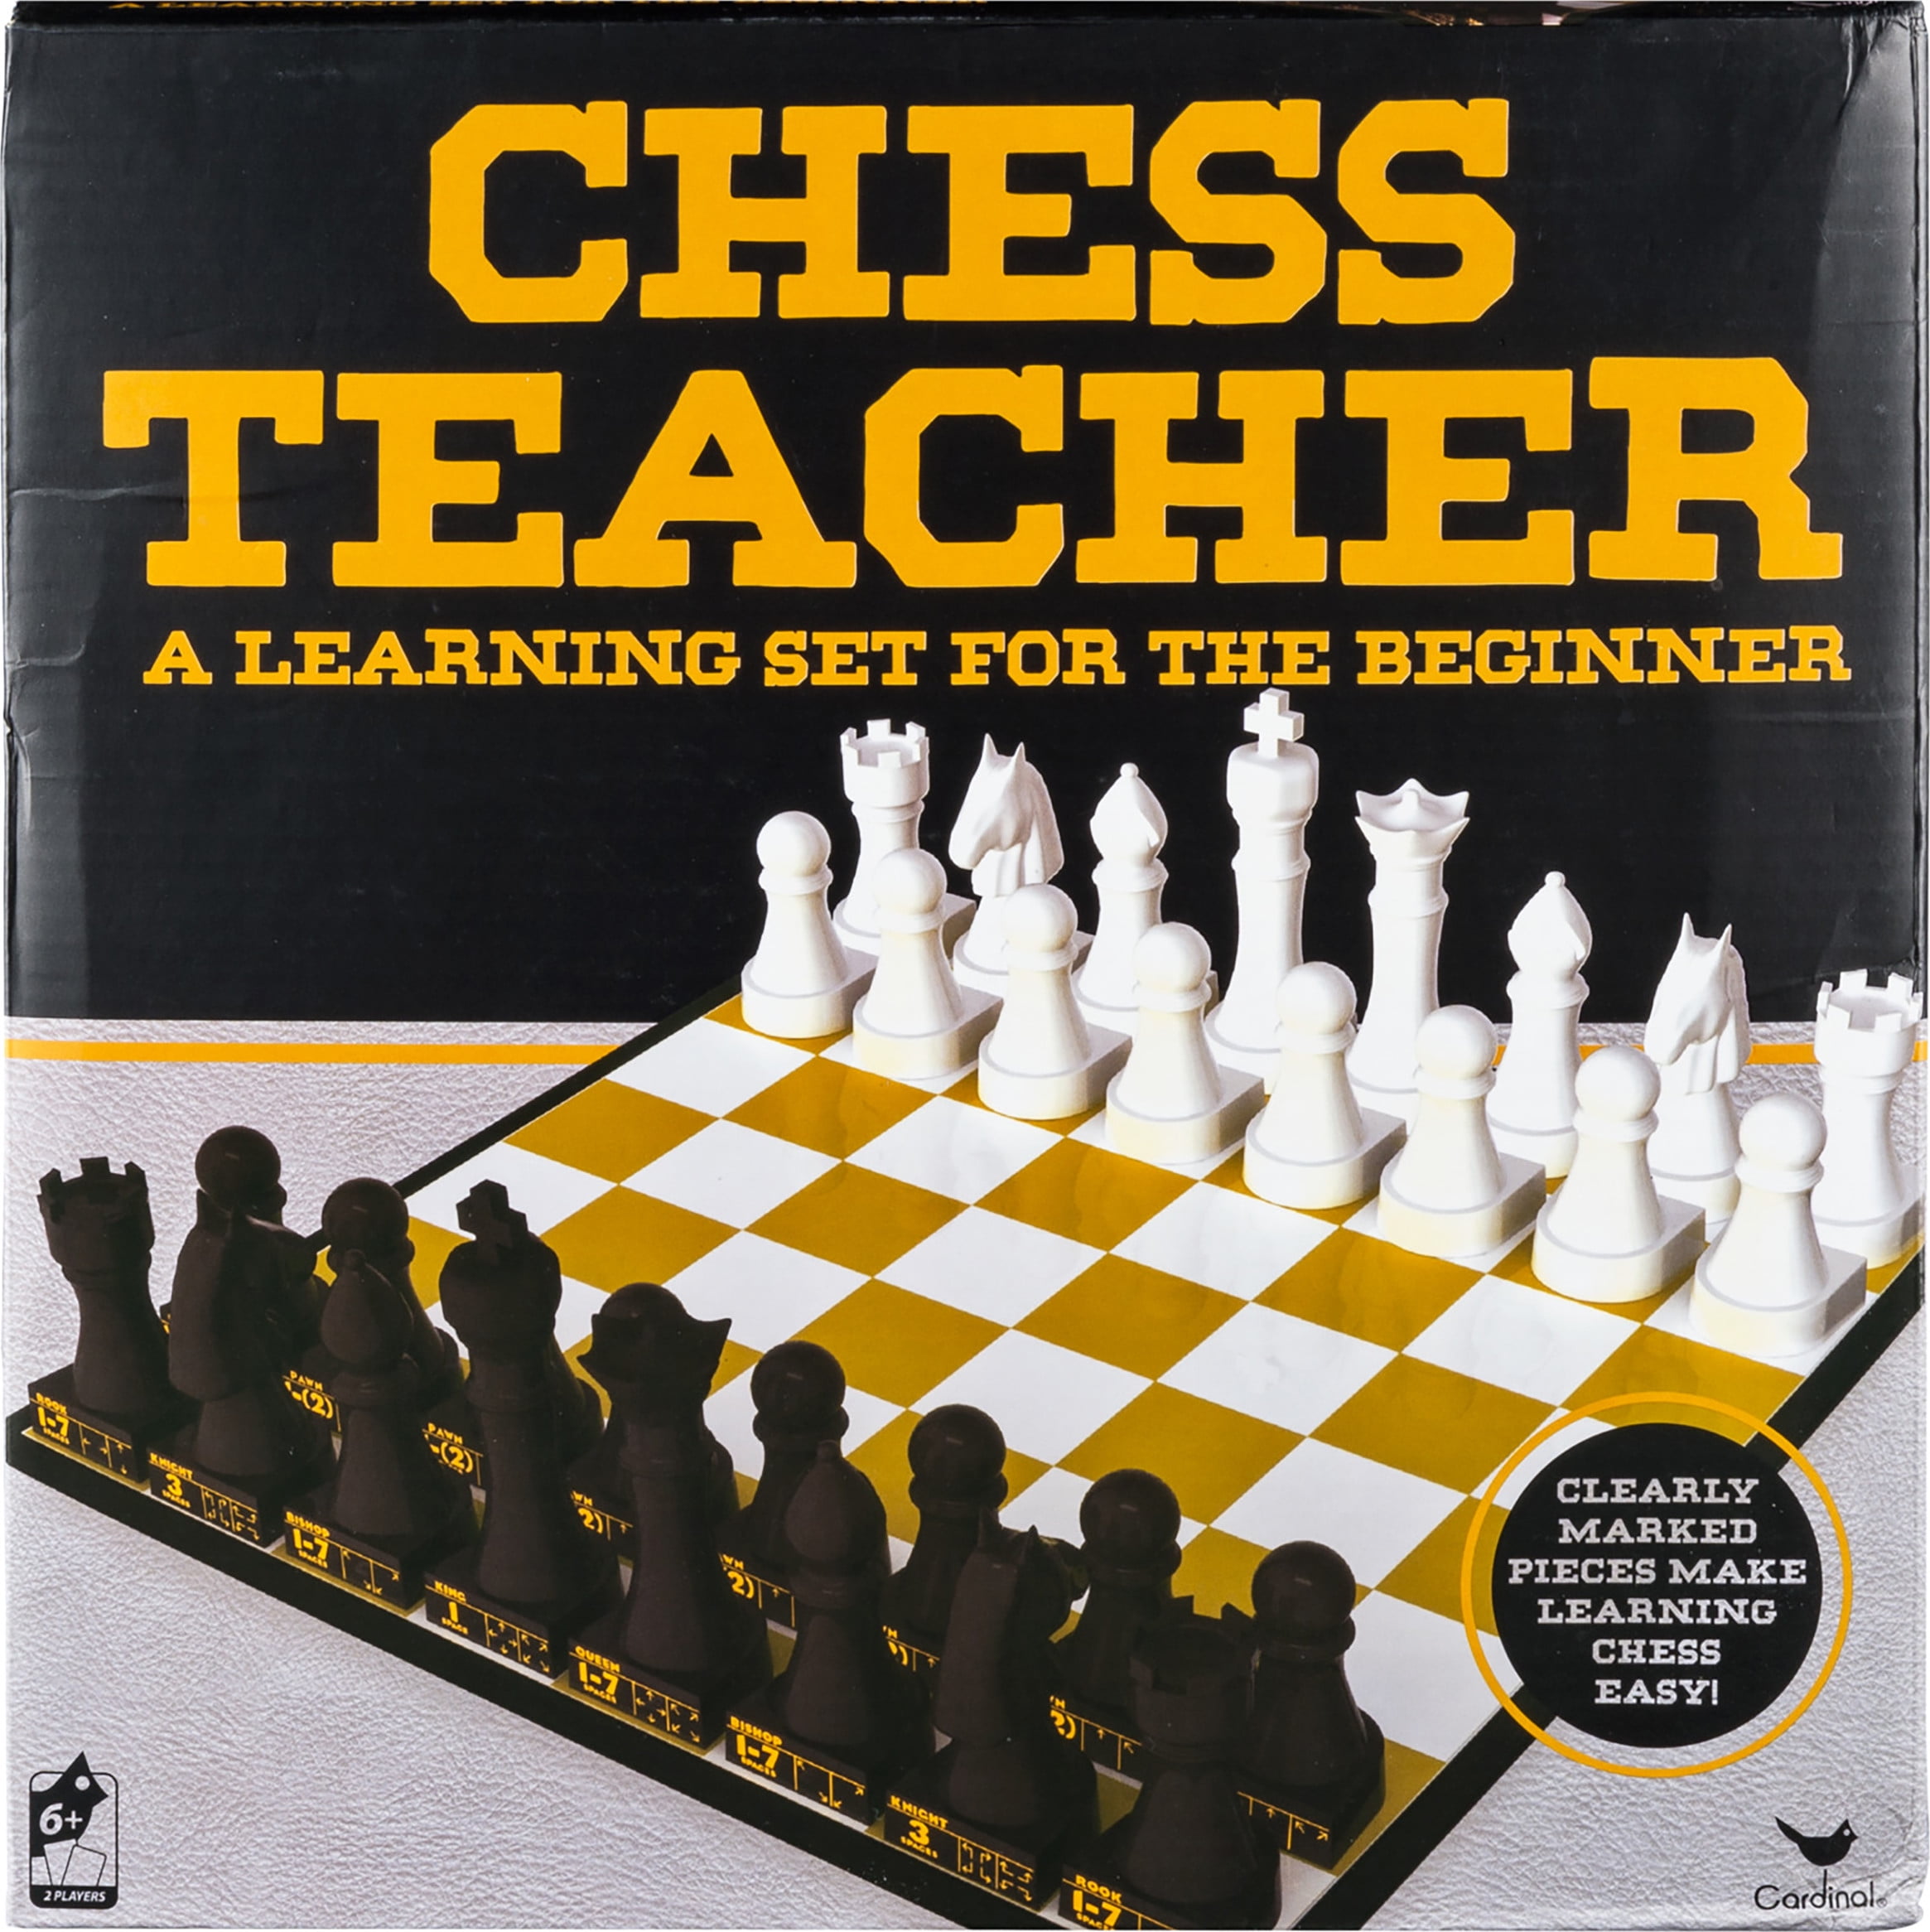 Master Chess - Safe Kid Games